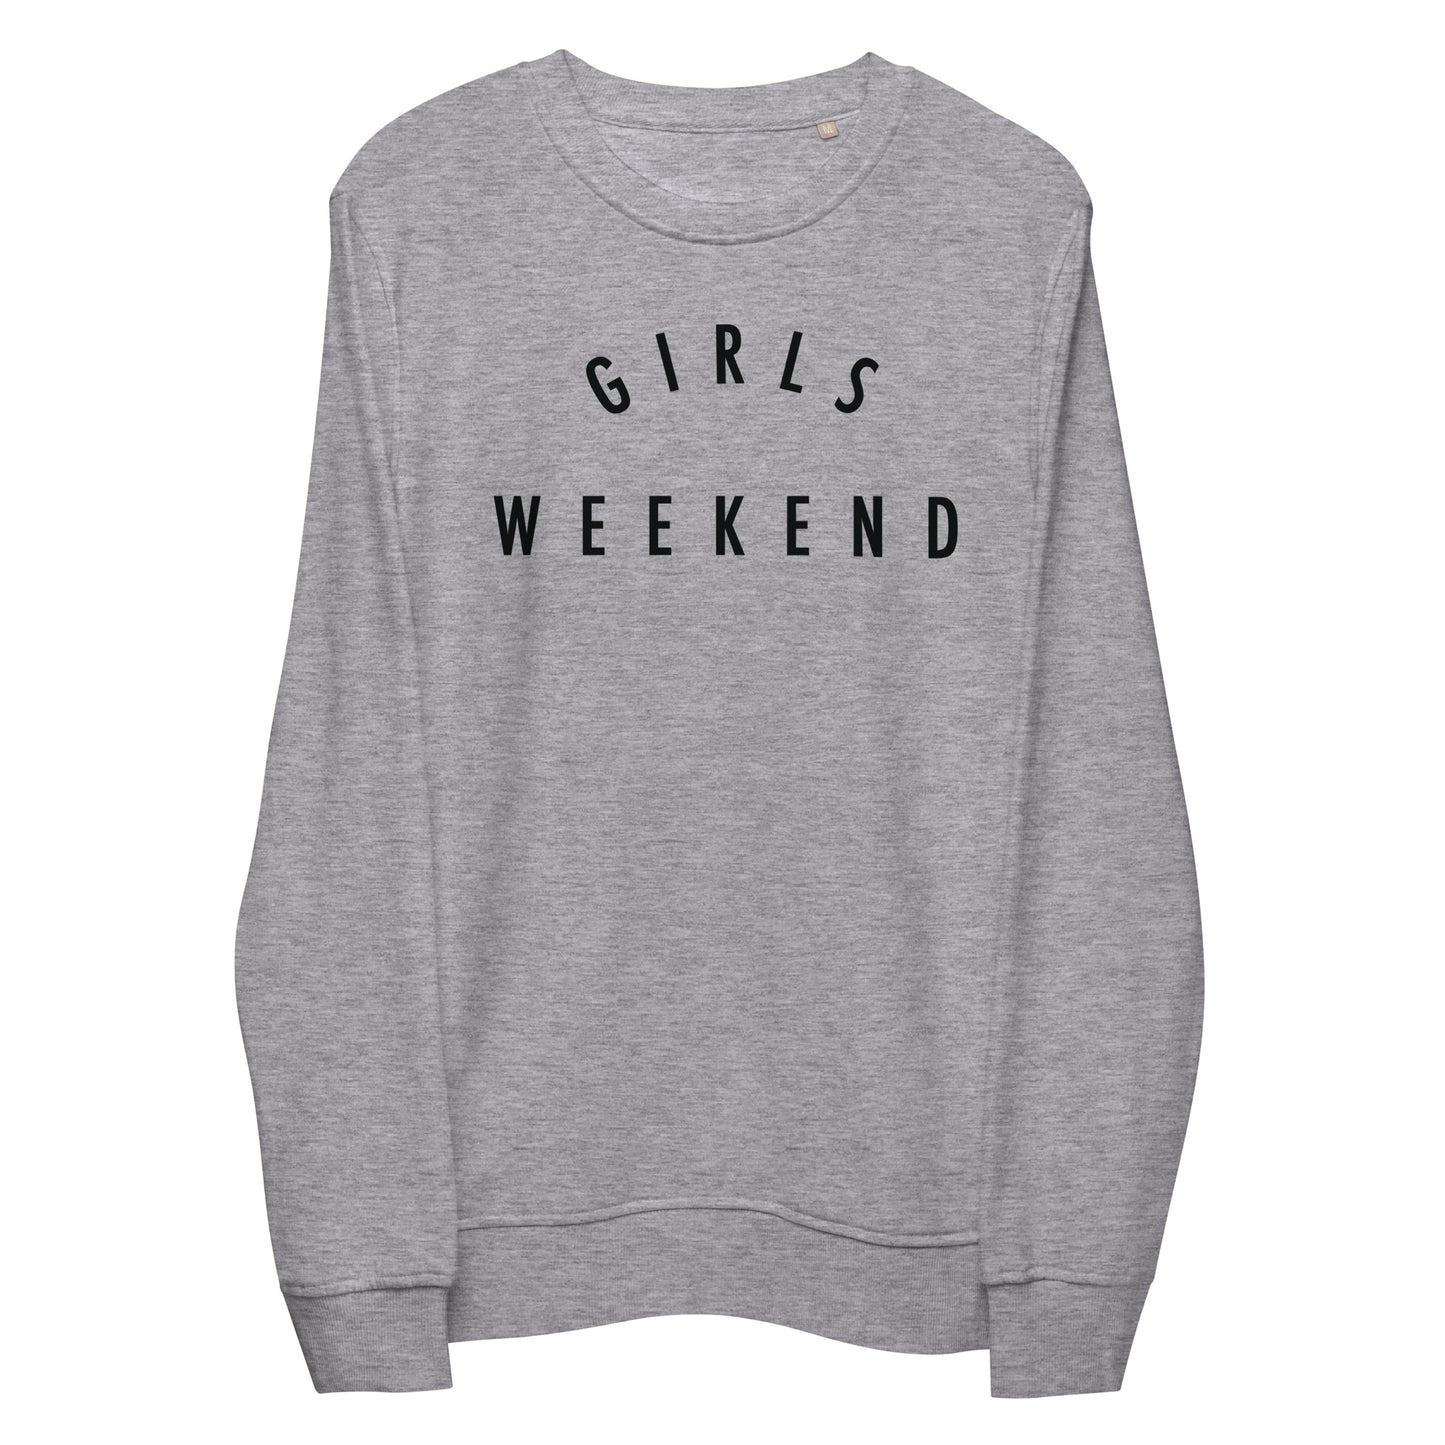 Grey girls weekend sweatshirt